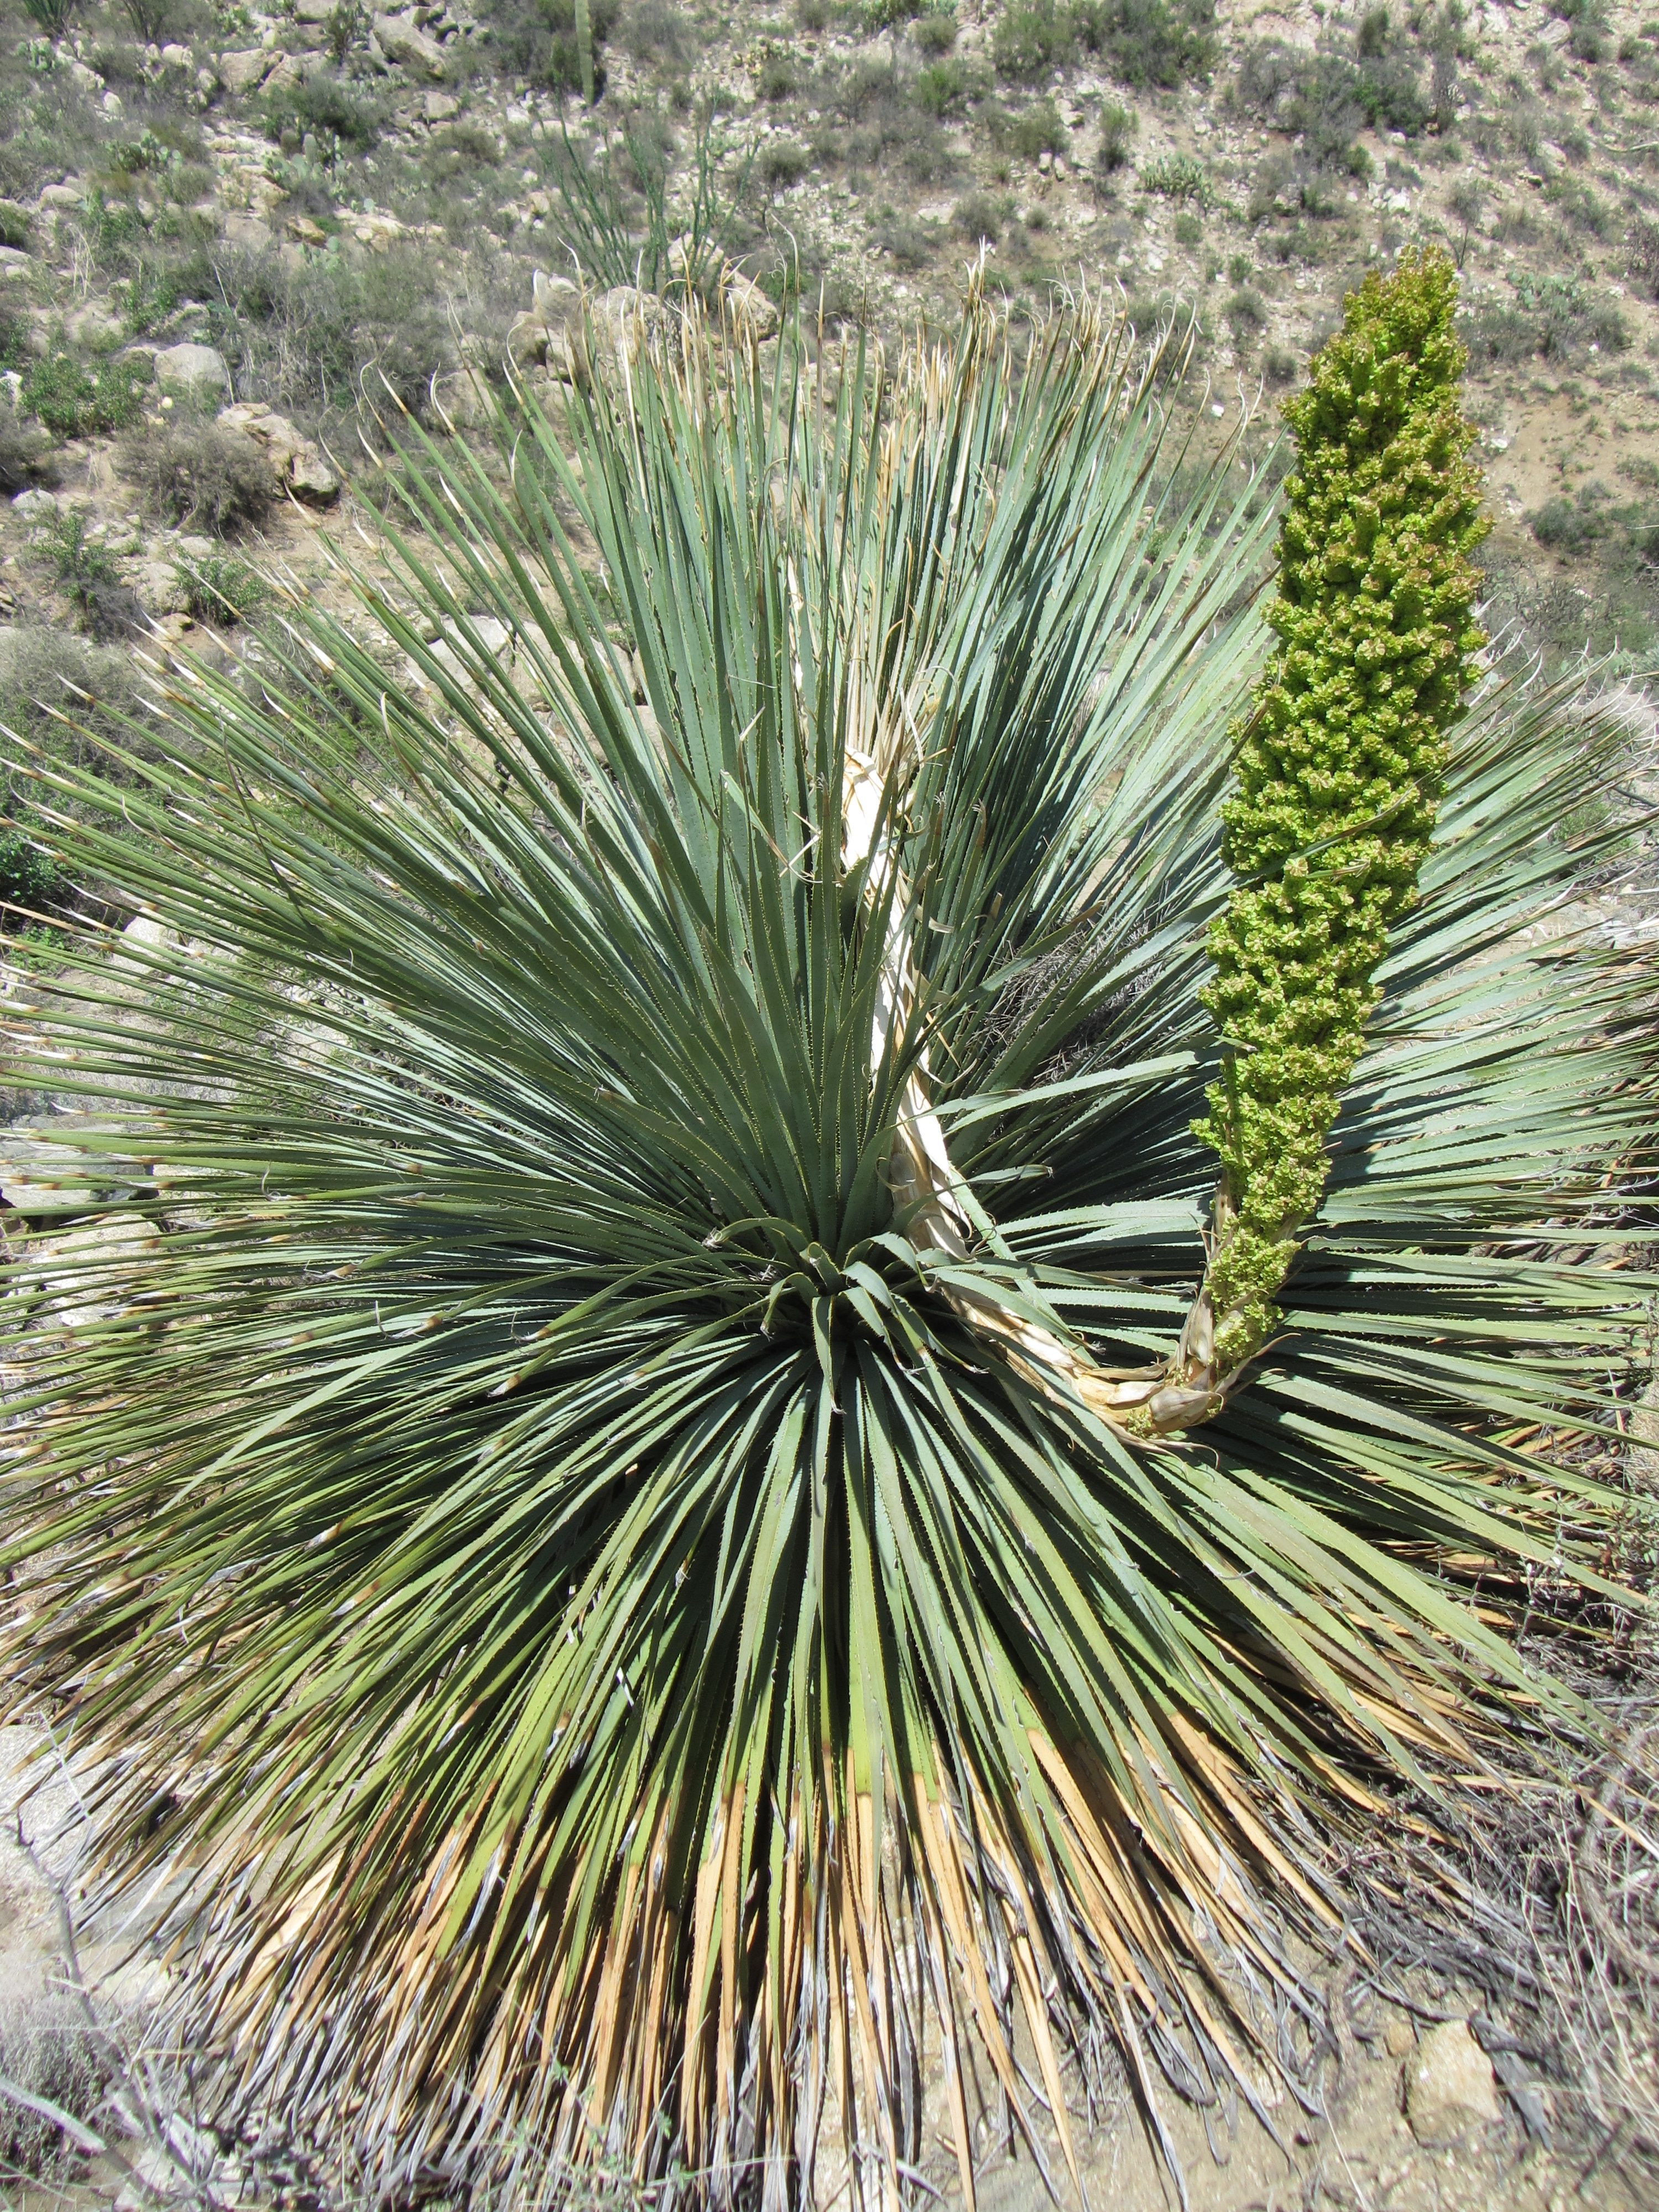 Desert spoon : The Arizona Native Plant Society